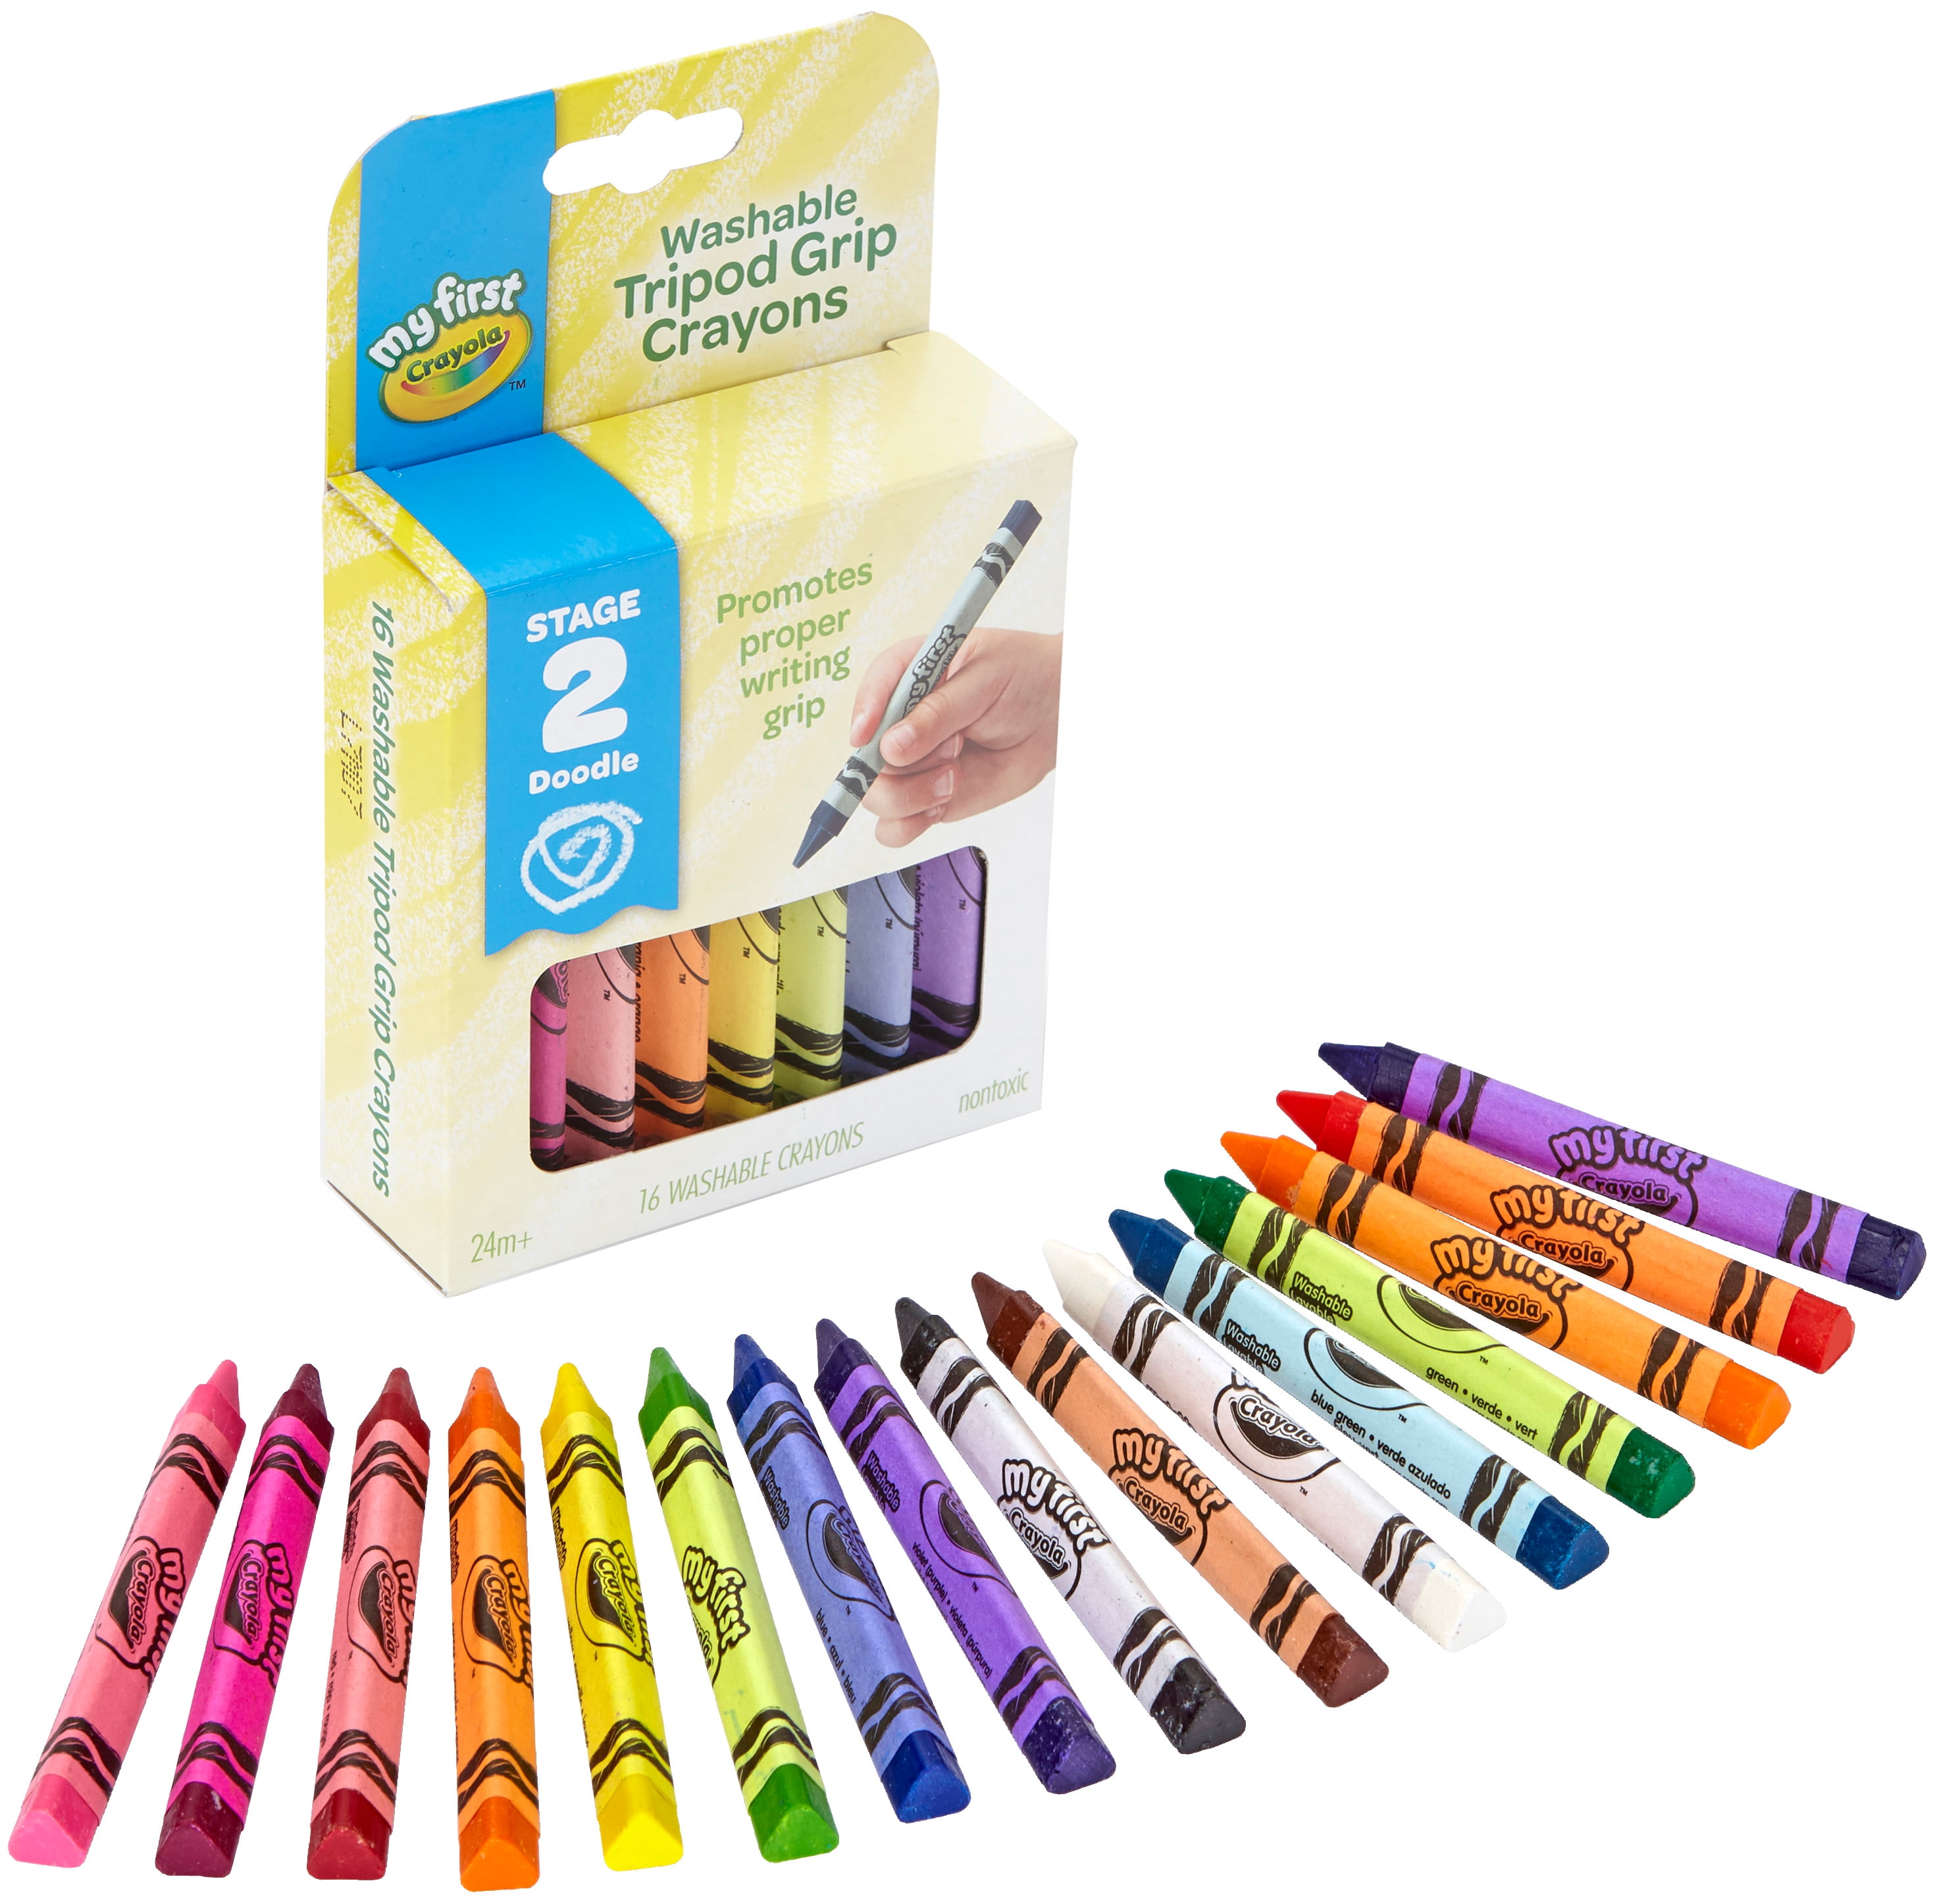 Crayola Crayons - RISD Store